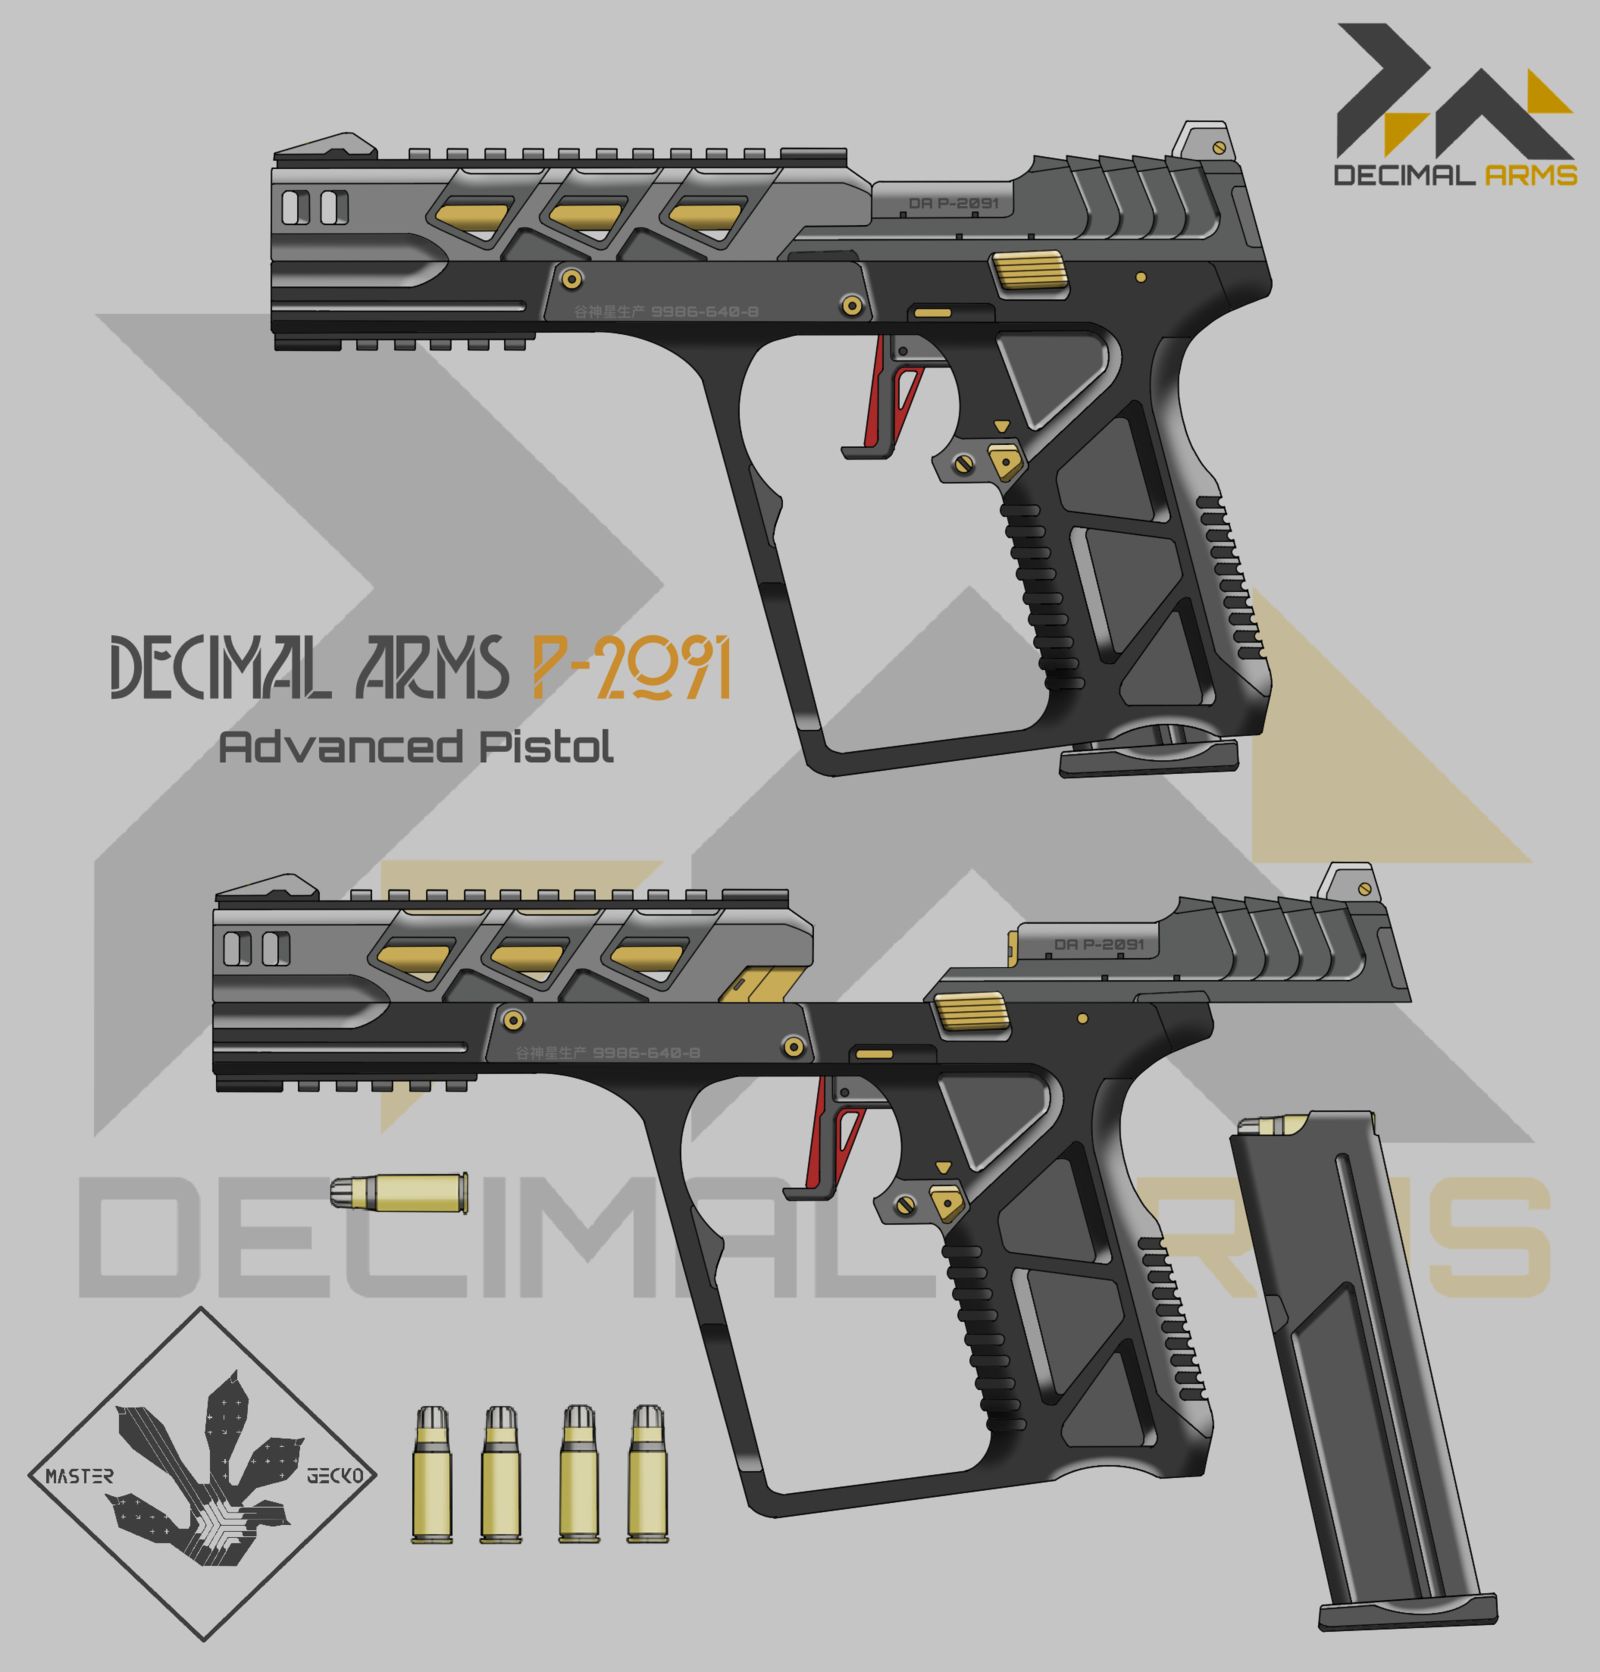 Decimal Arms P-2091